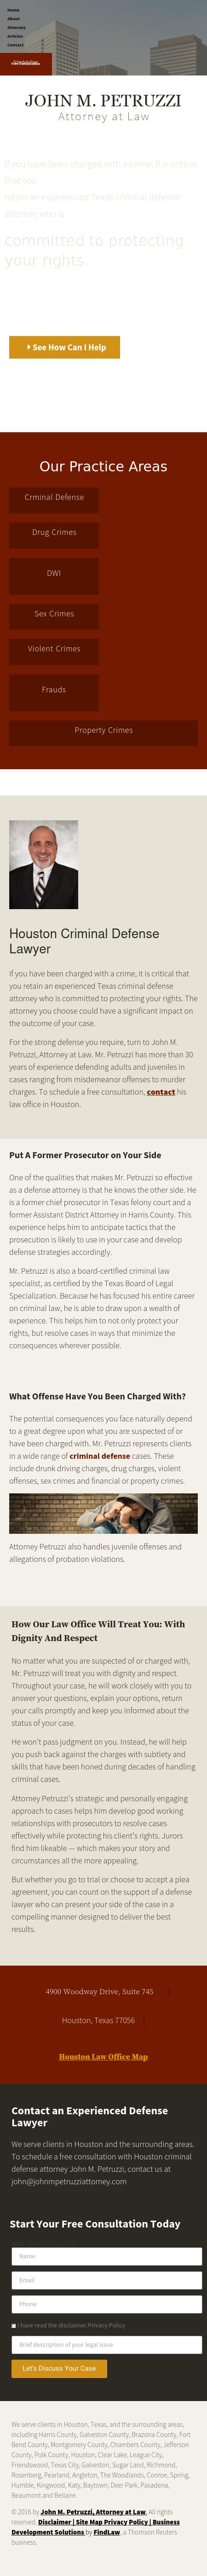 24/7 Legal - Houston TX Lawyers